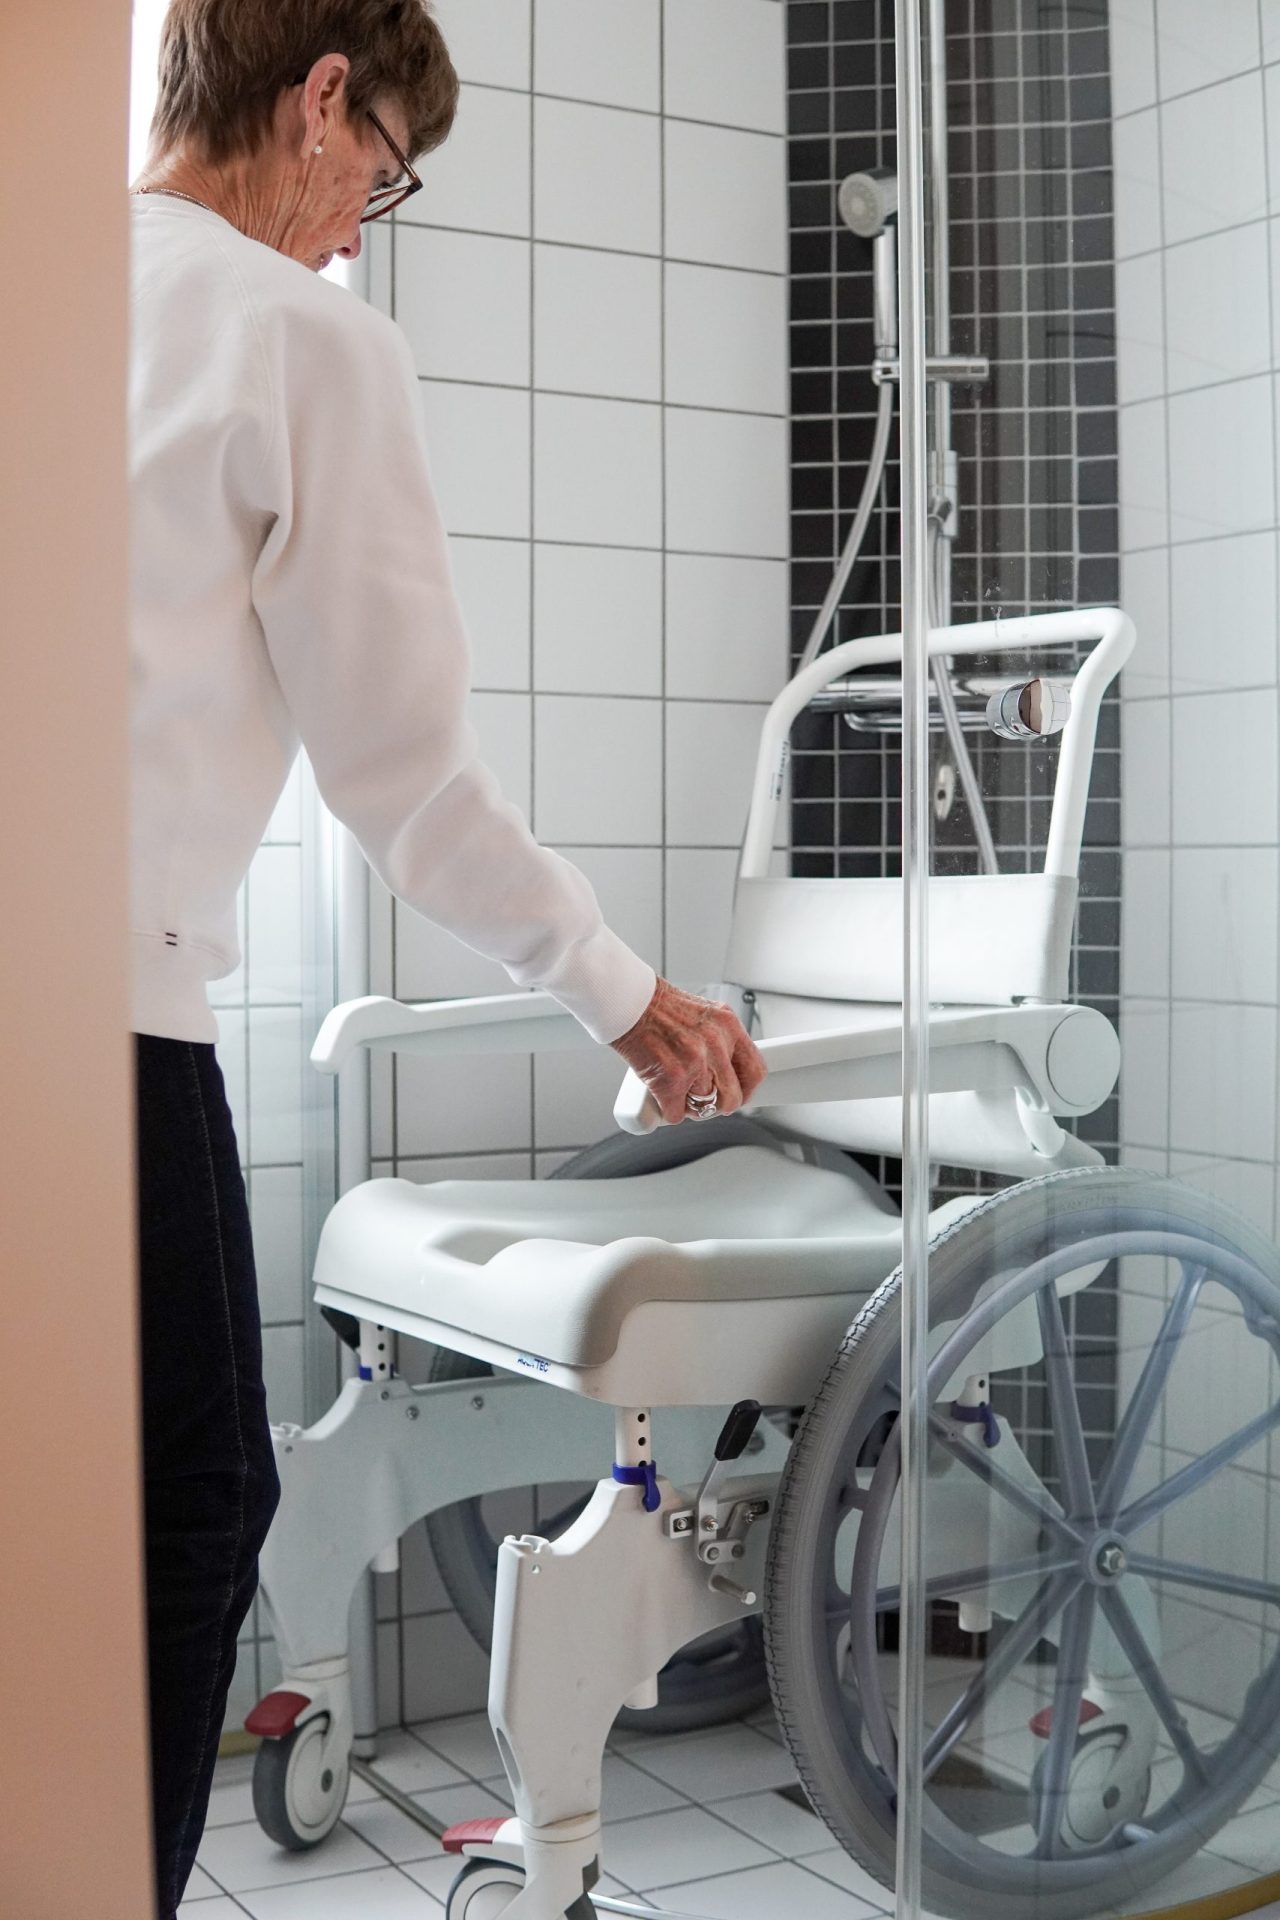 En person ställer i ordning en duschstol i en dusch.